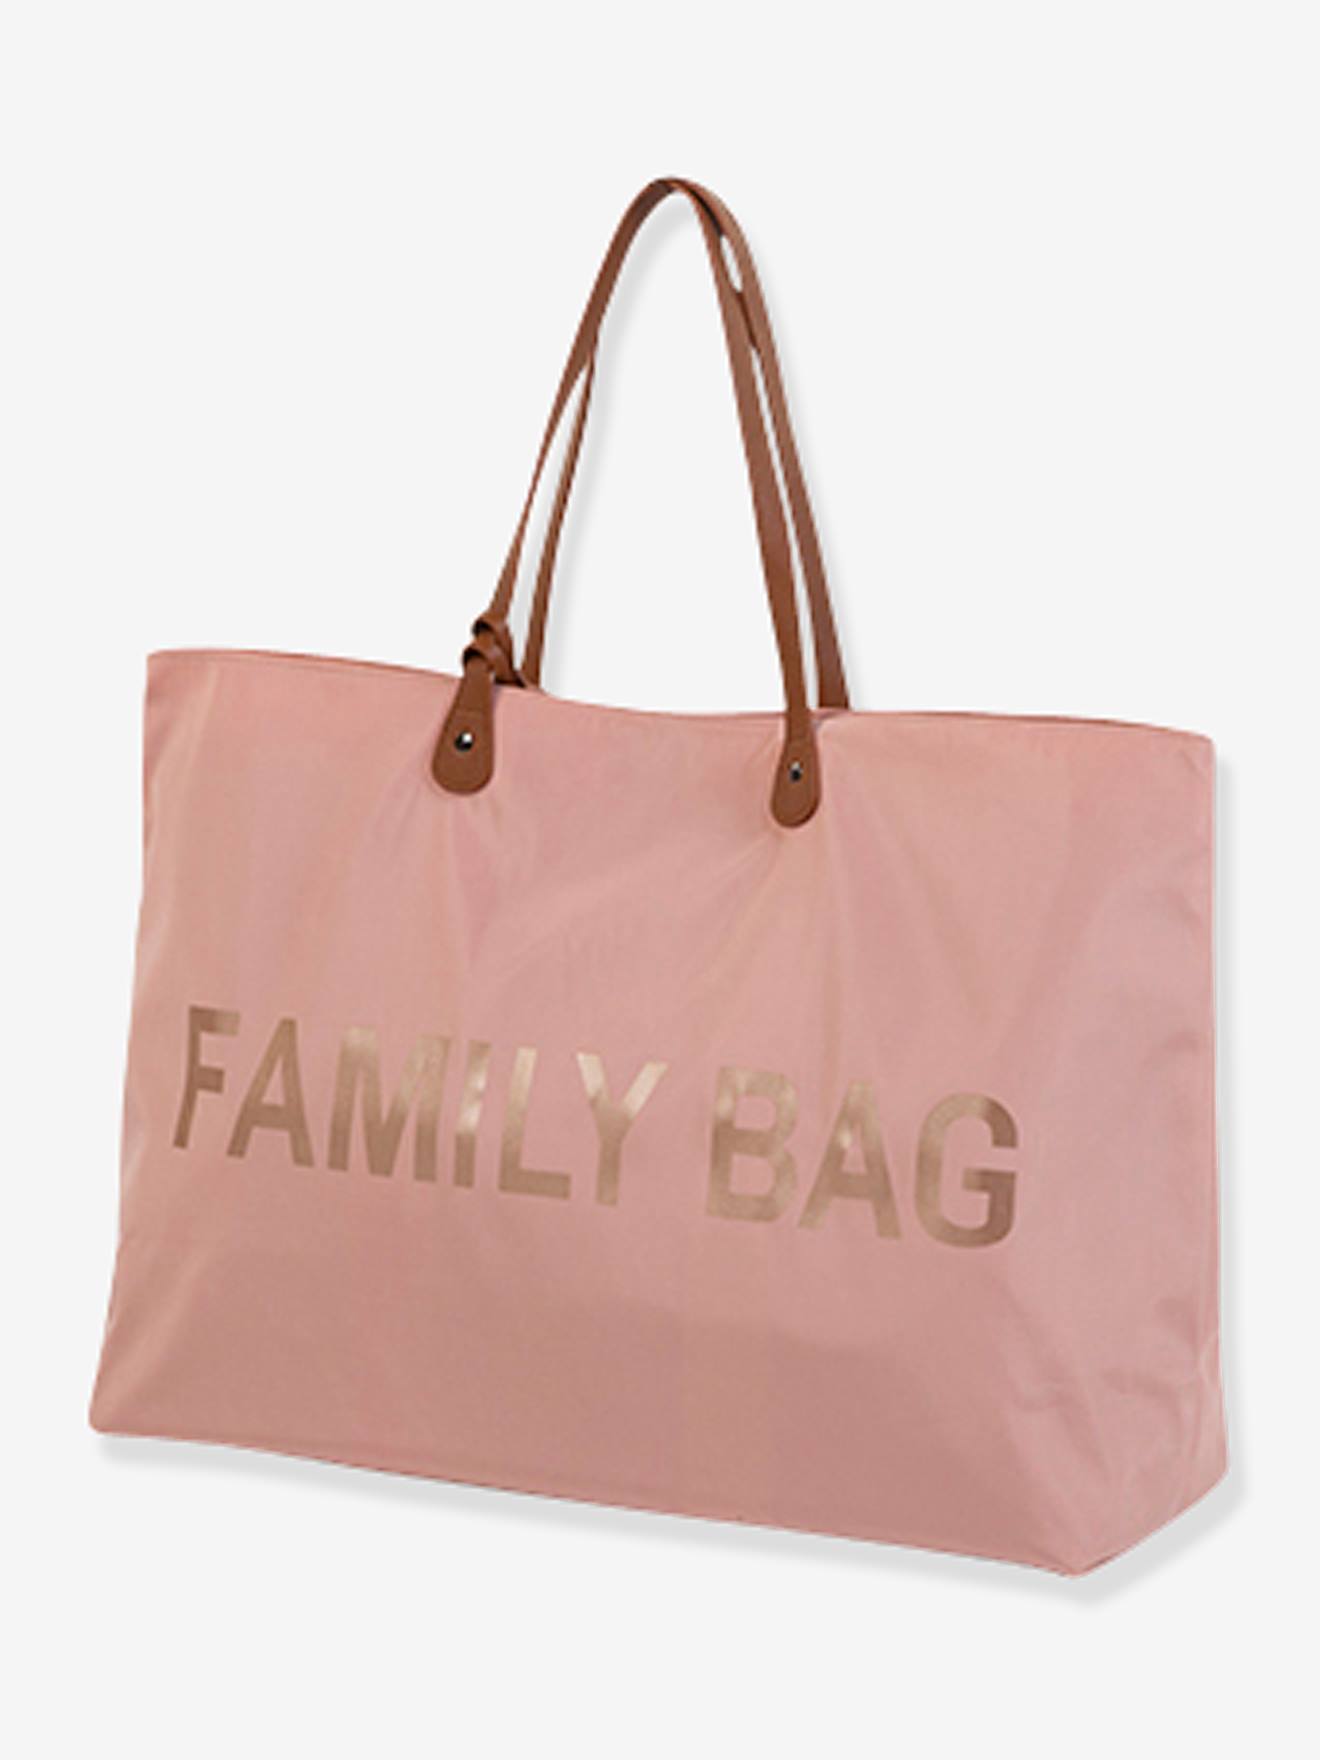 Childhome Family Bag - acheter sur Galaxus